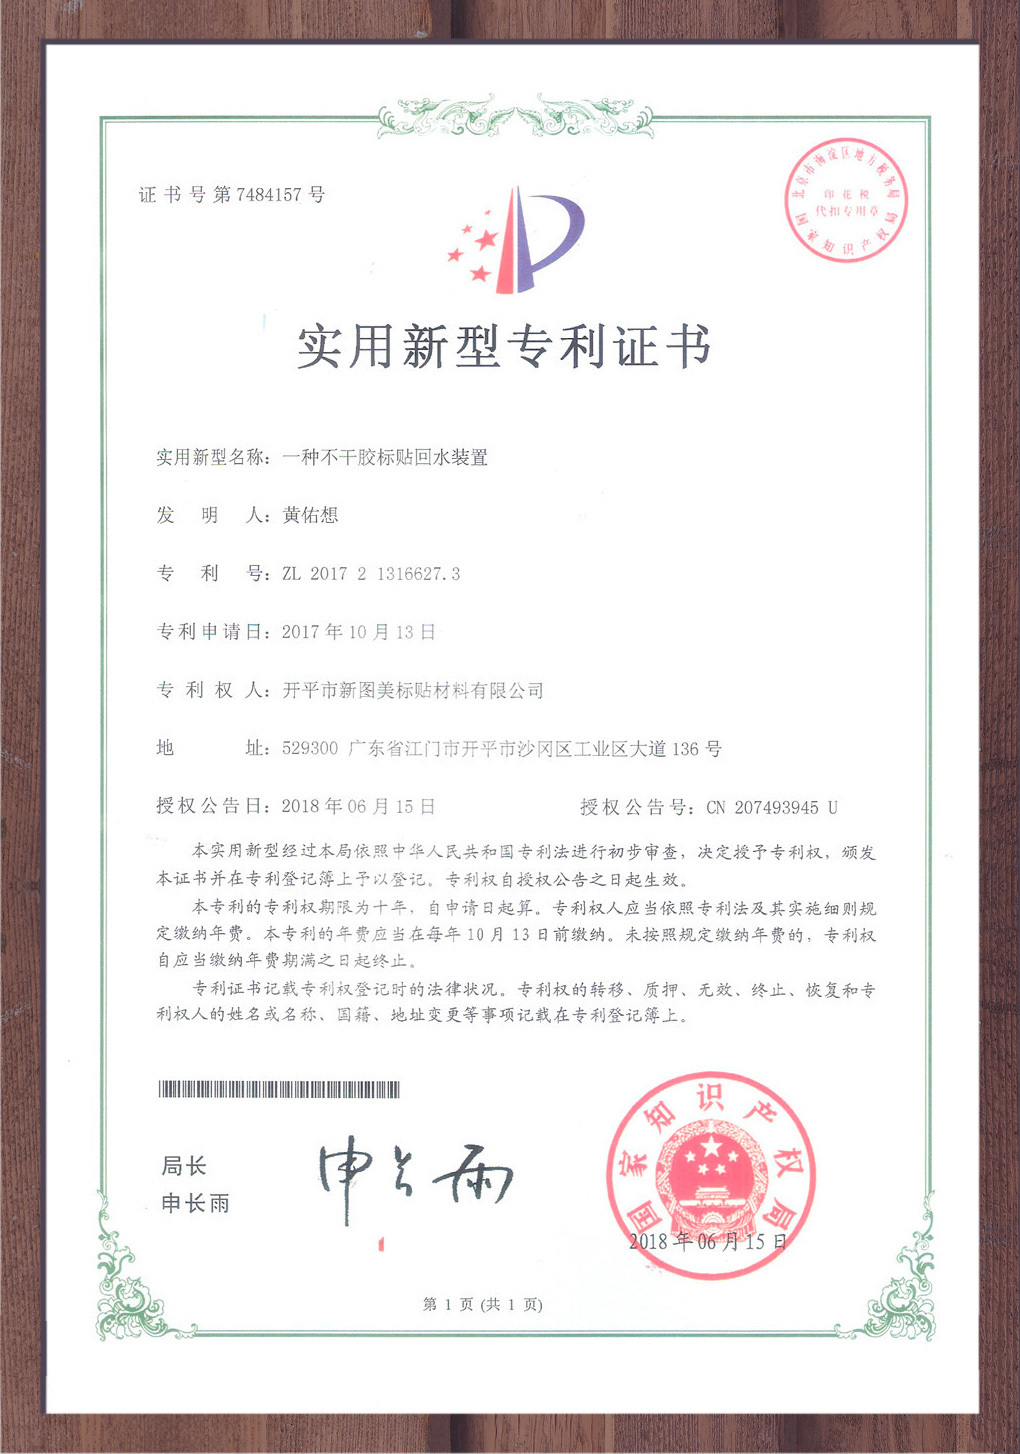 Patent Certificate 02